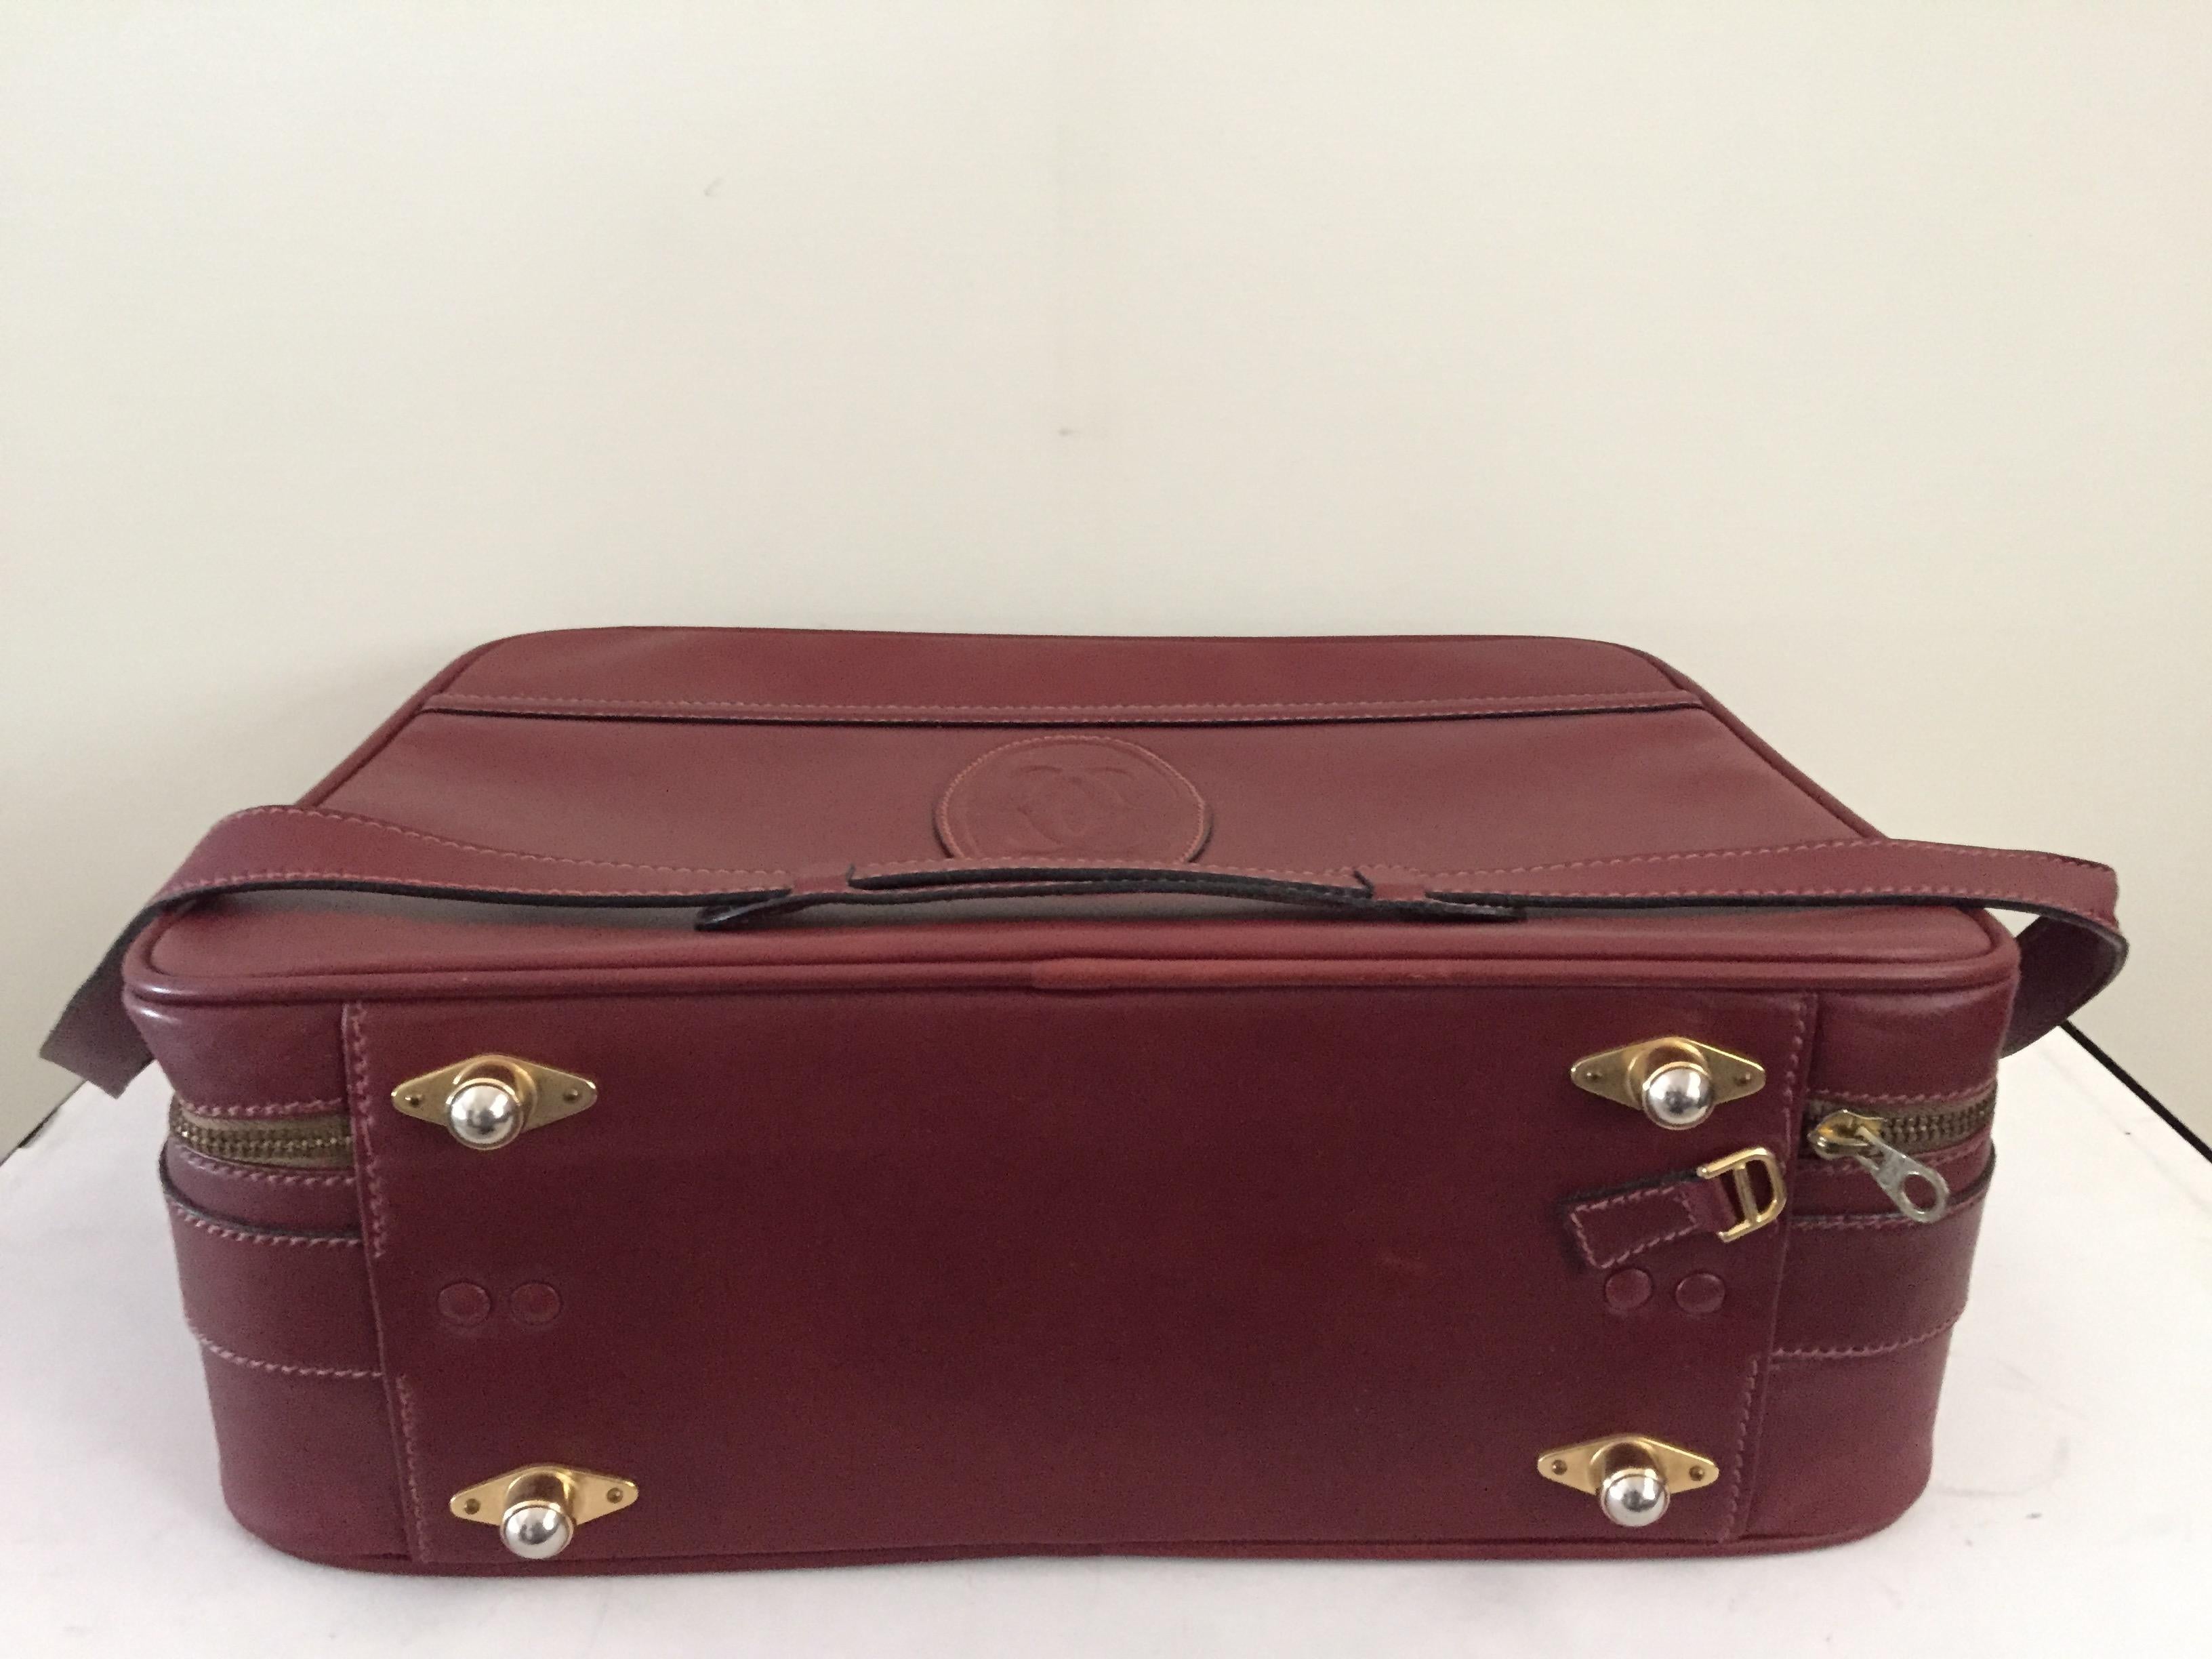 Cartier Les Must de Cartier Burgundy Leather Travel Overnight Suitcase / Luggage 4